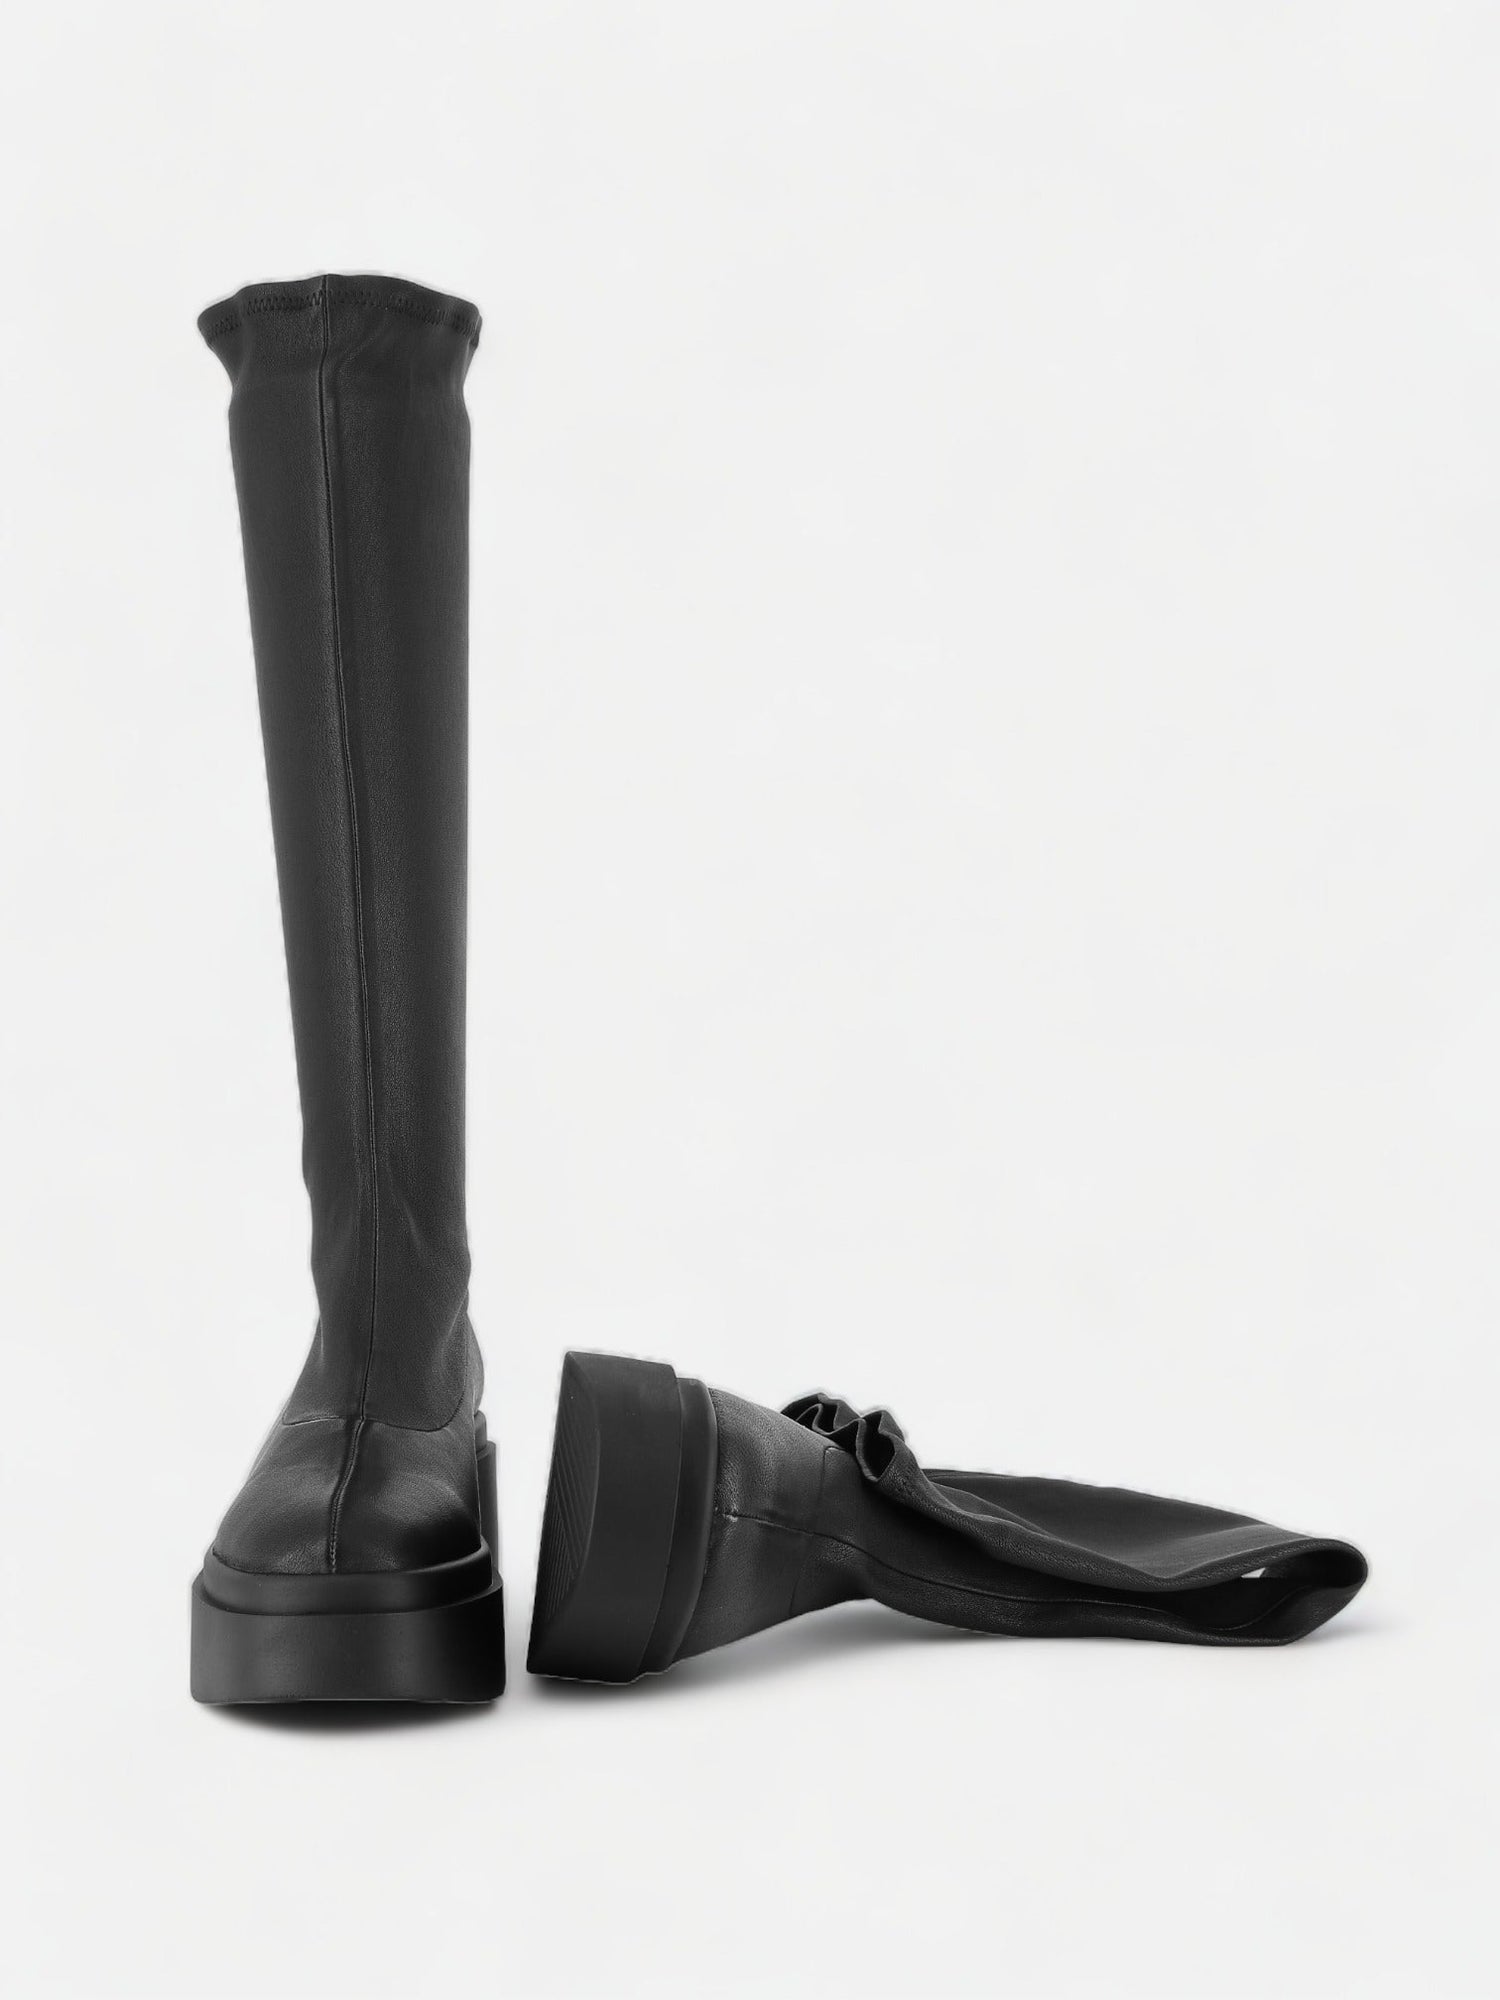 BOOTS - NOVA boots, stretch lambskin black - 3606063814461 - Clergerie Paris - Europe